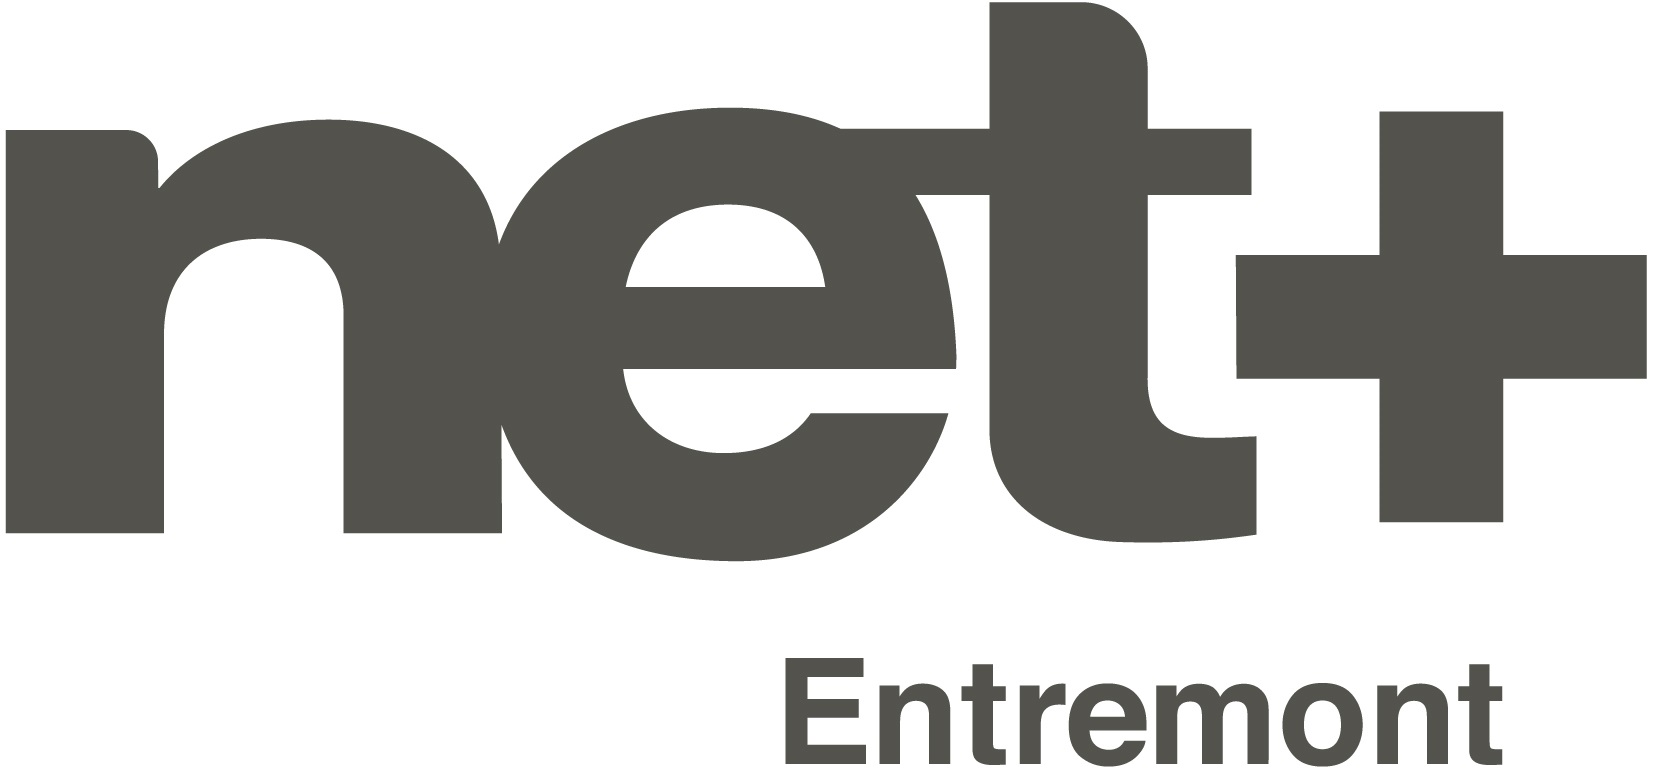 netPlus_entremont_logo